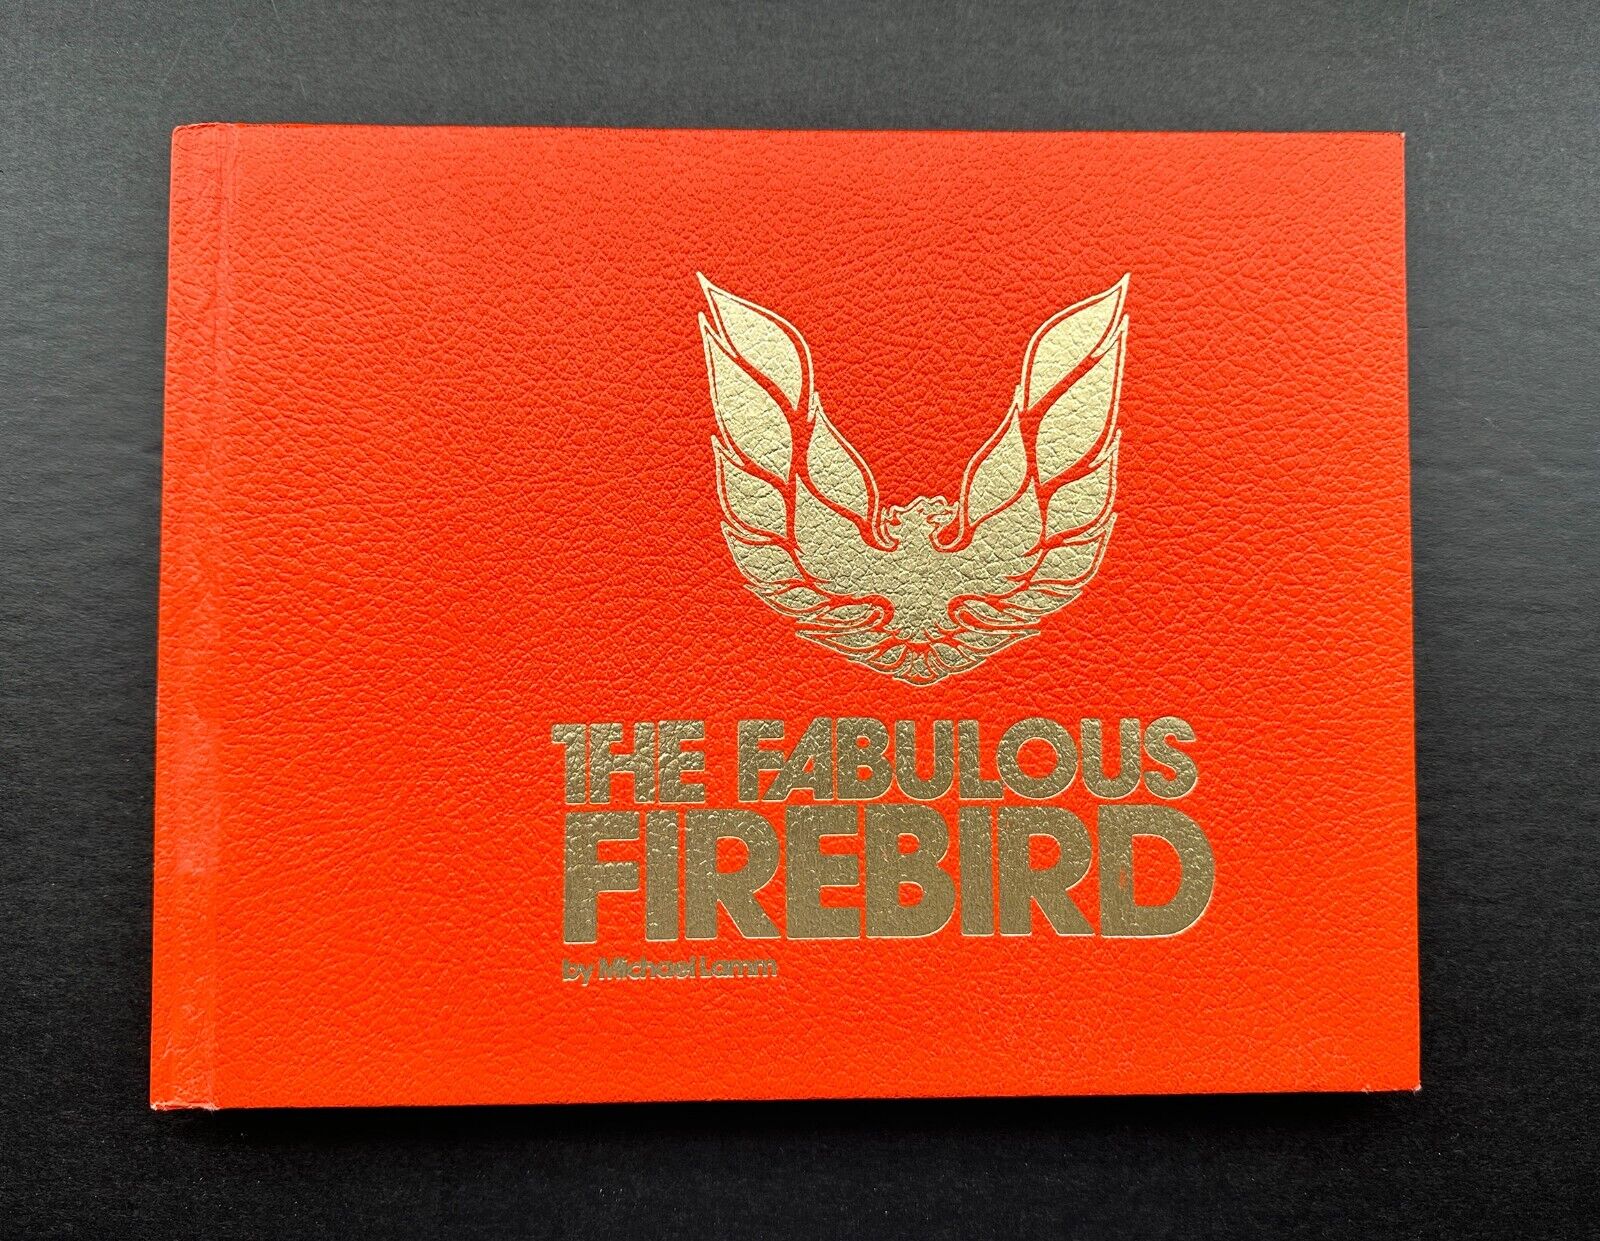 The Fabulous Firebird by Michael Lamm 1st edition - New never opened.